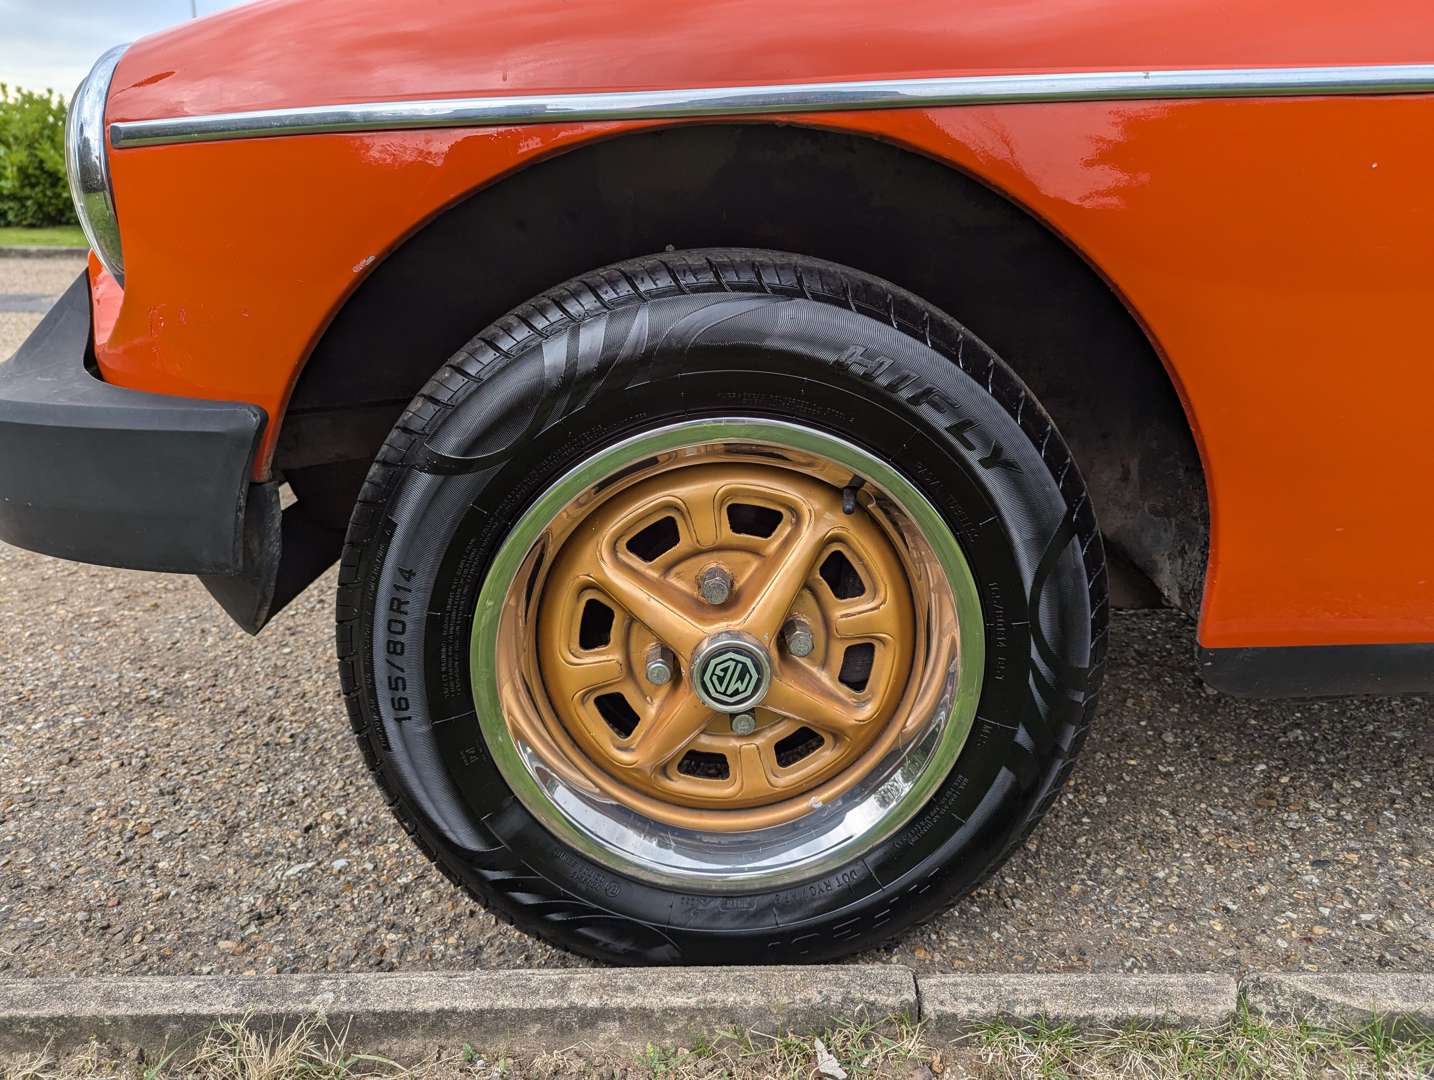 <p>1978 MG B GT&nbsp;</p>